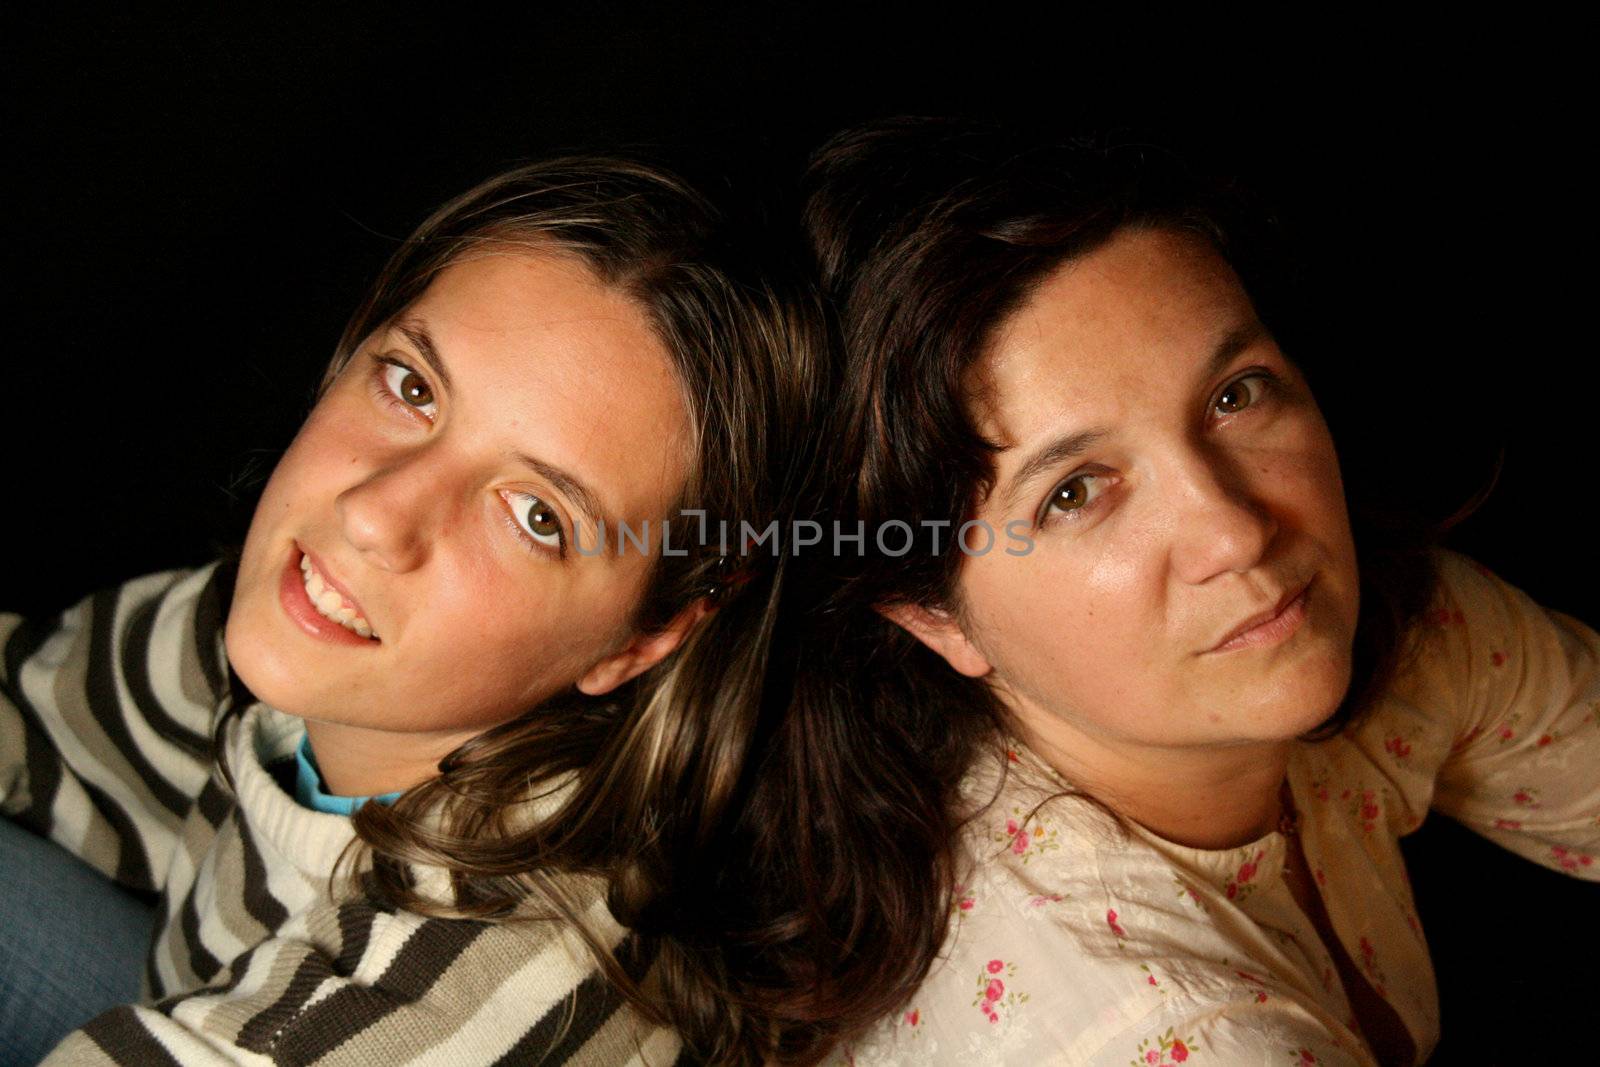 beautiful photo of sisters by jpcasais